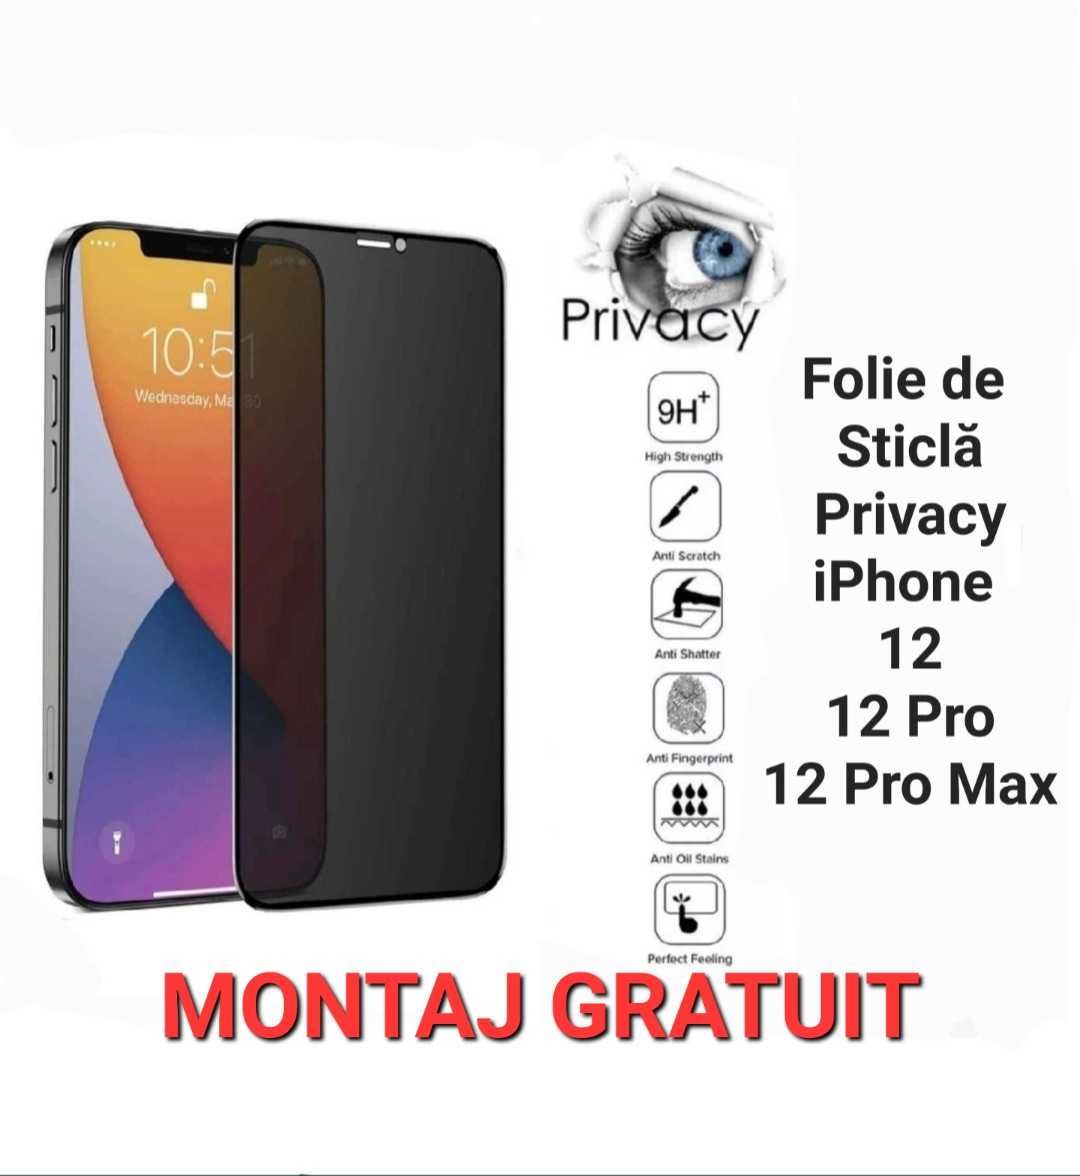 Folie Sticla Privacy Full iPhone X 11 12 13 14 15 Pro Pro Max Plus